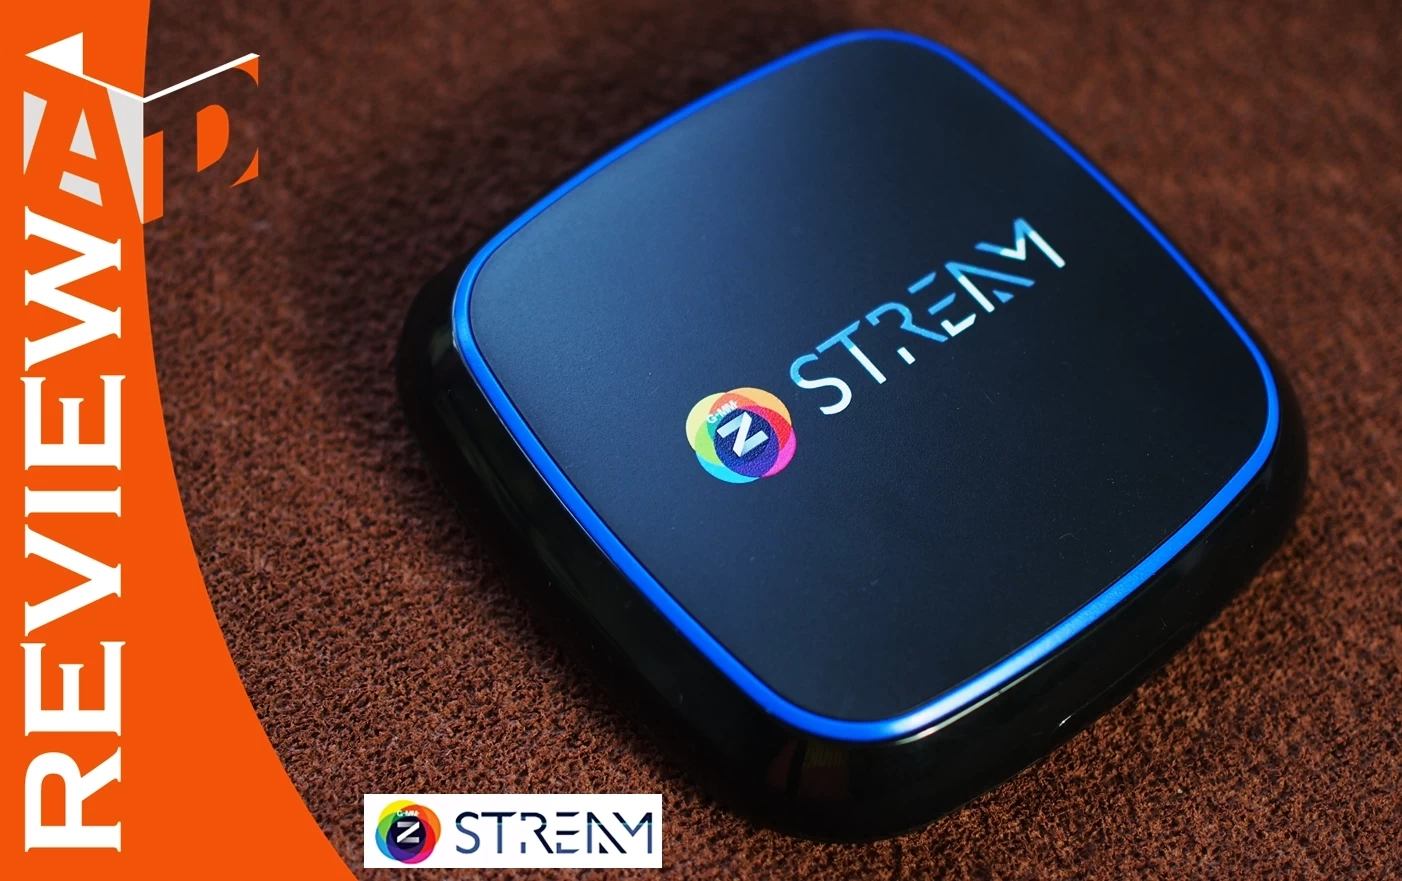 gmm z stream appdisqus | Android box | รีวิว GMM Z STREAM สุดยอดกล่อง Android TV รองรับ 4K และมีตัวควบคุมชั้นยอดอย่าง Air Mouse Remote